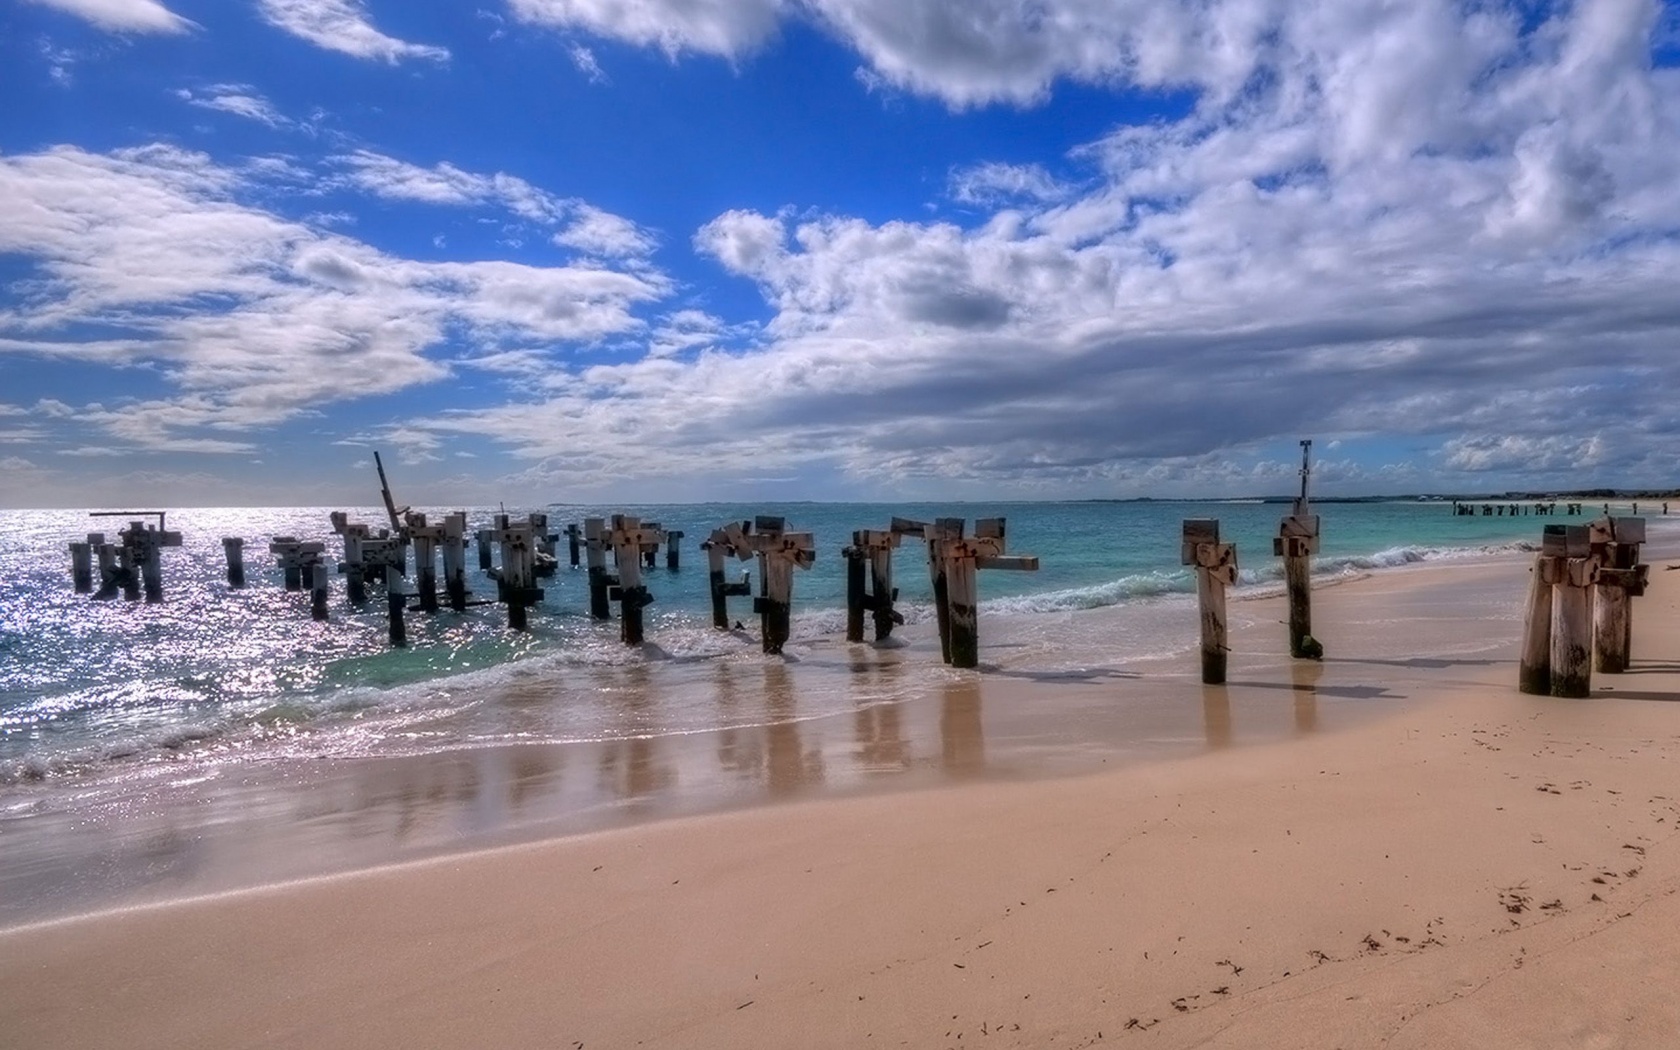 Beautiful Scenery Jurien Bay Tourism Beach Western Australia Australia World